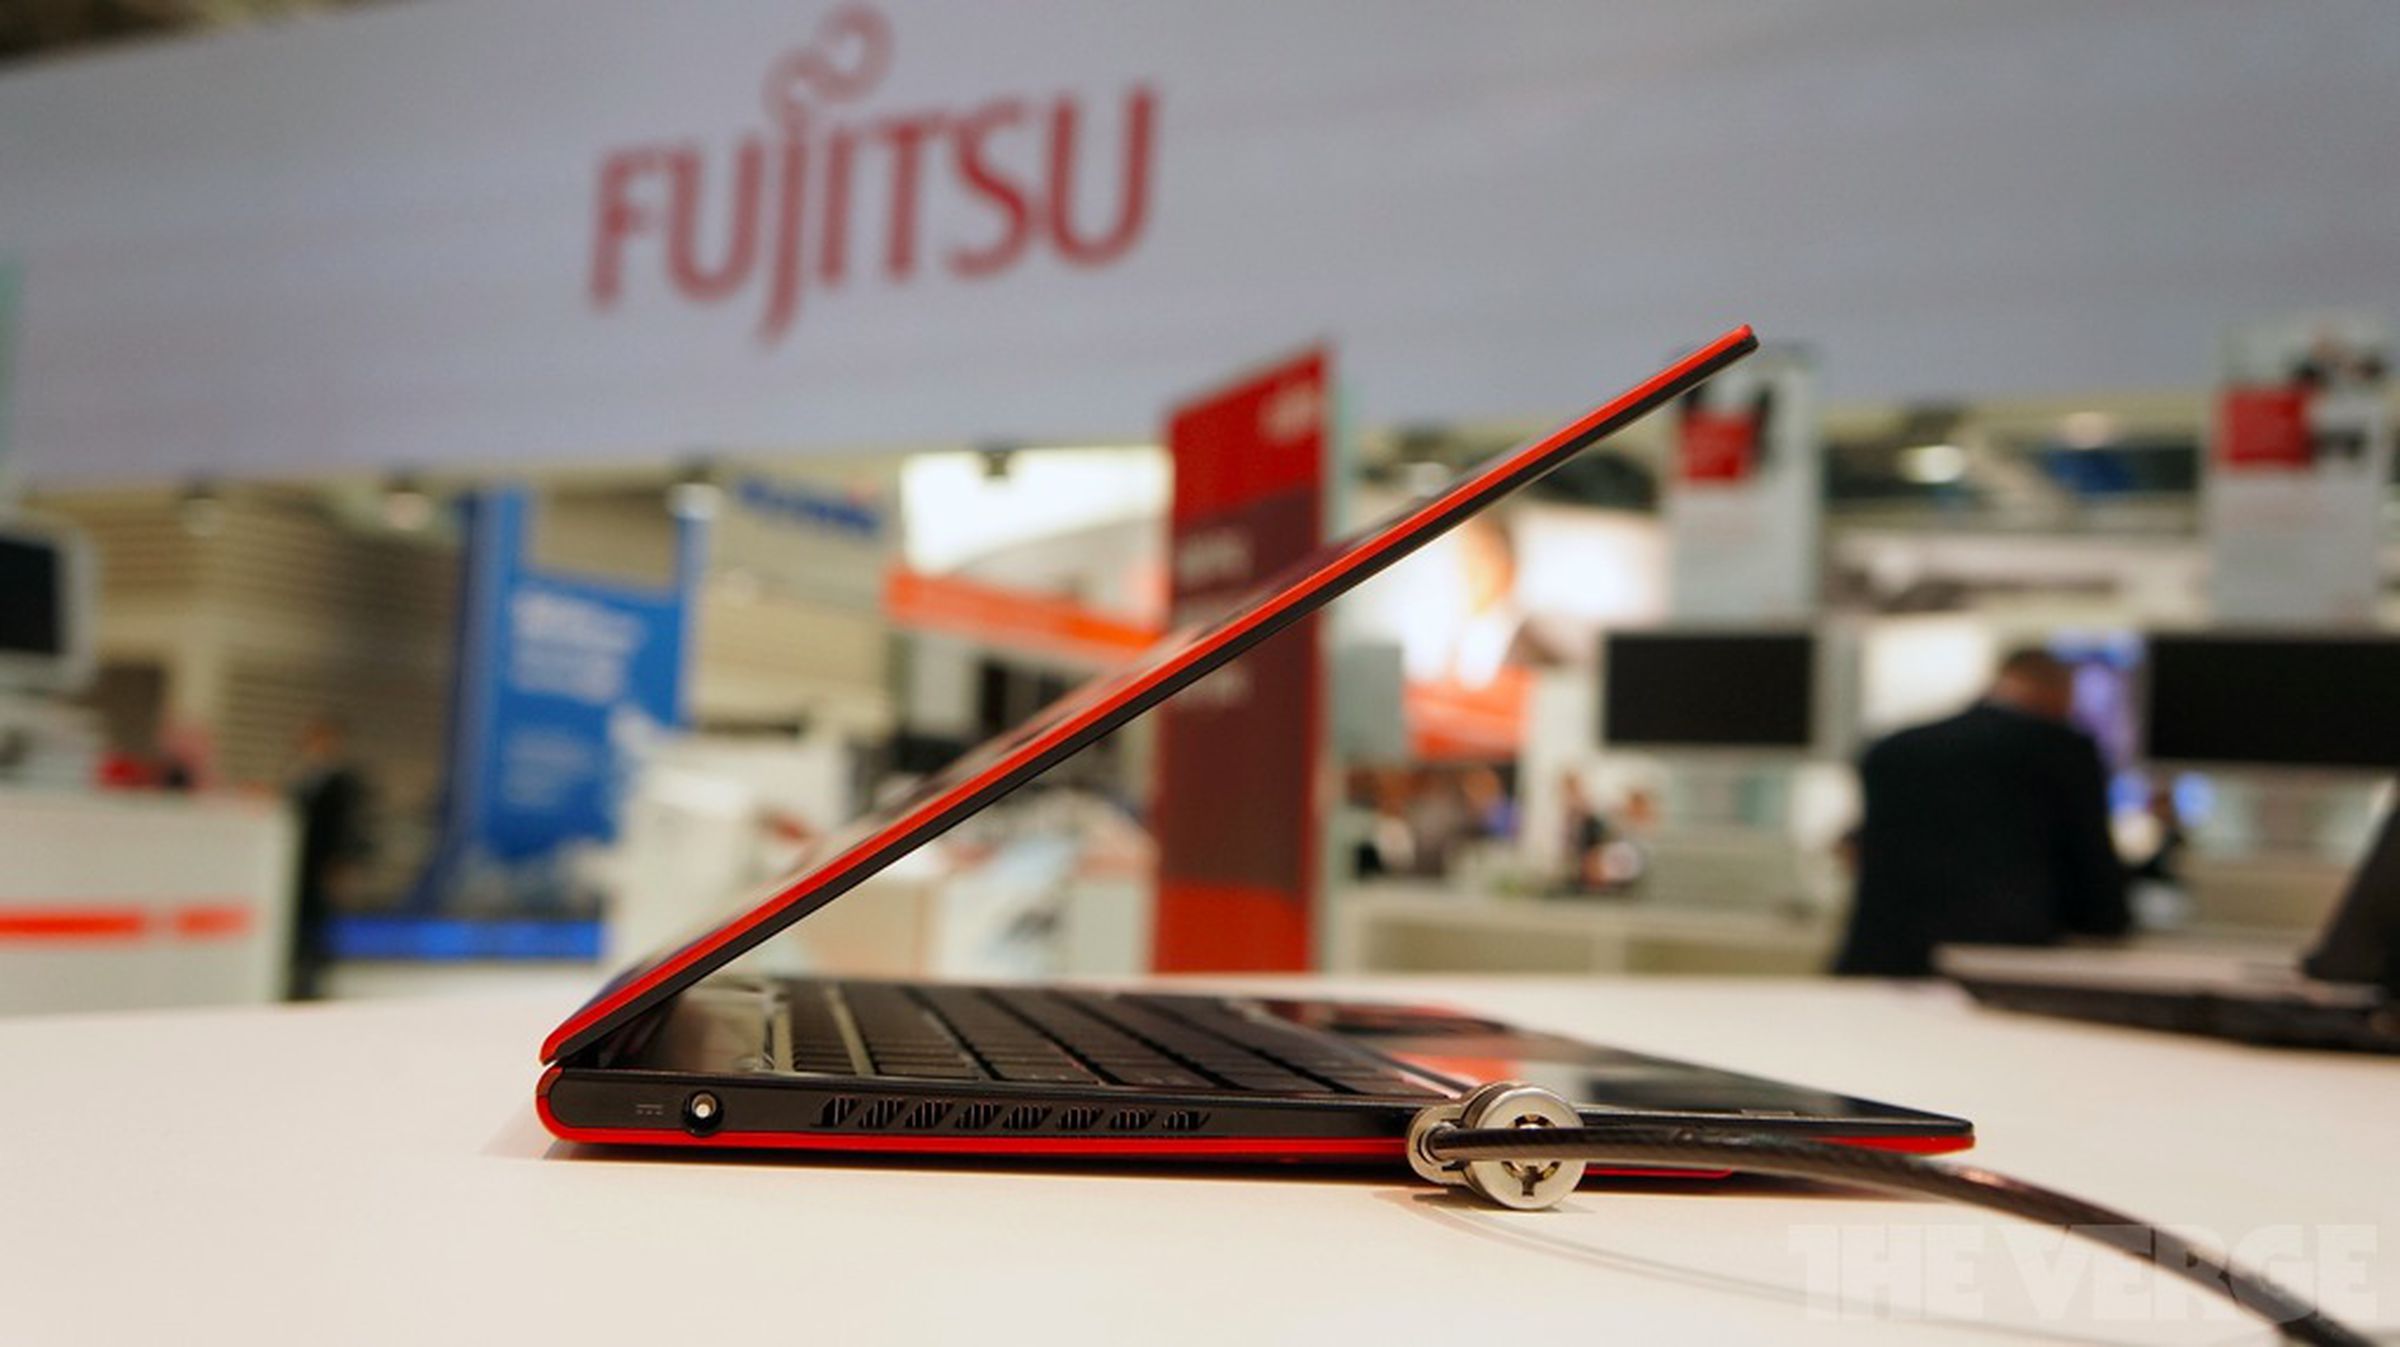 Fujitsu premium ultrabook hands-on photos